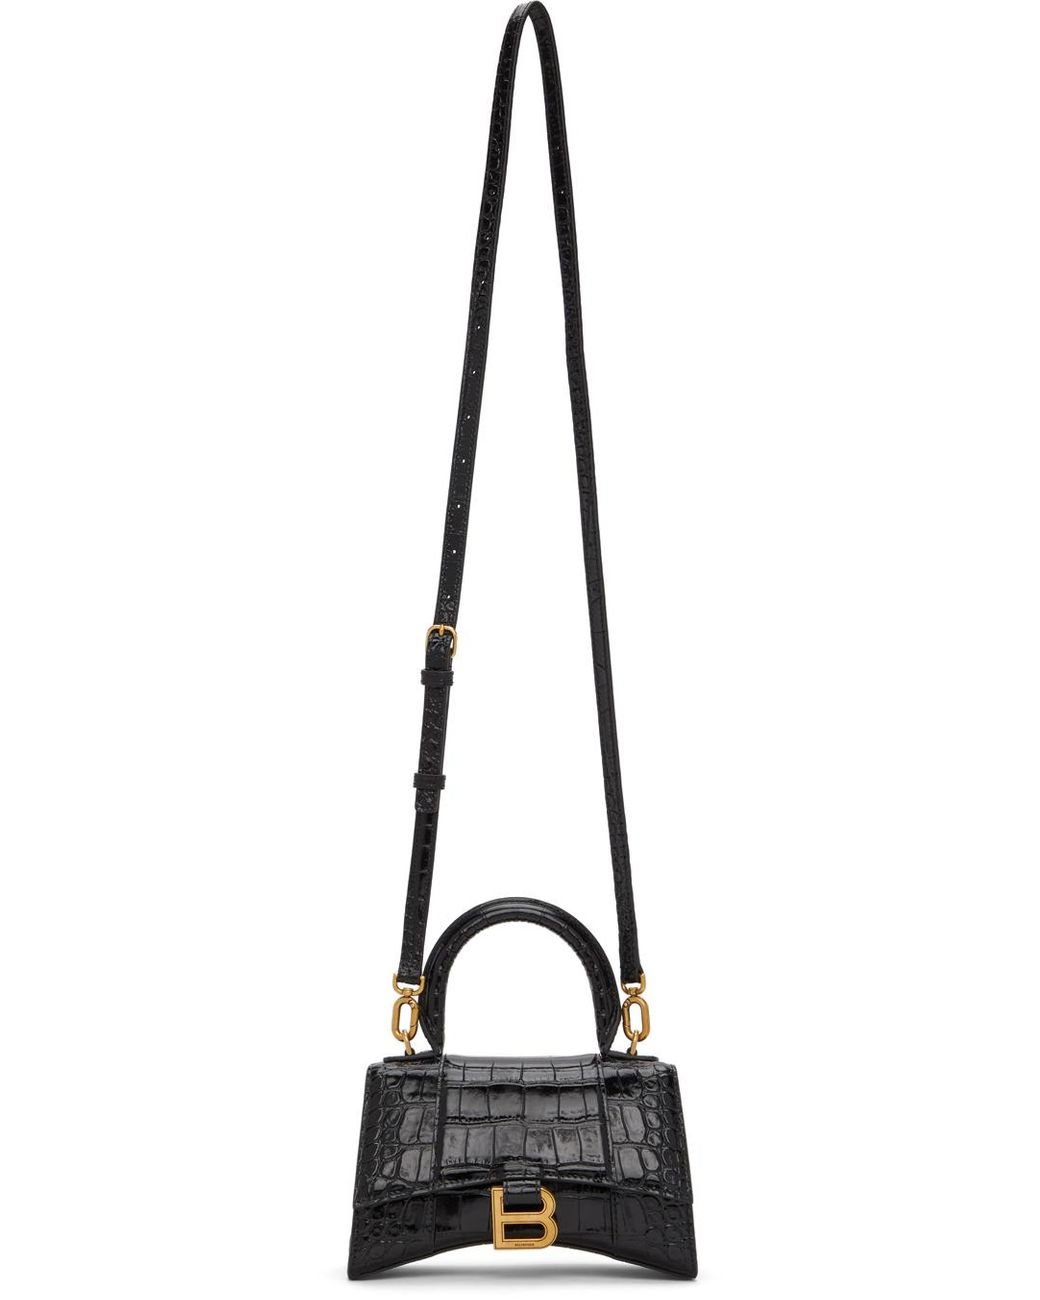 Balenciaga Leather Croc Xs Hourglass Bag in Black - Lyst